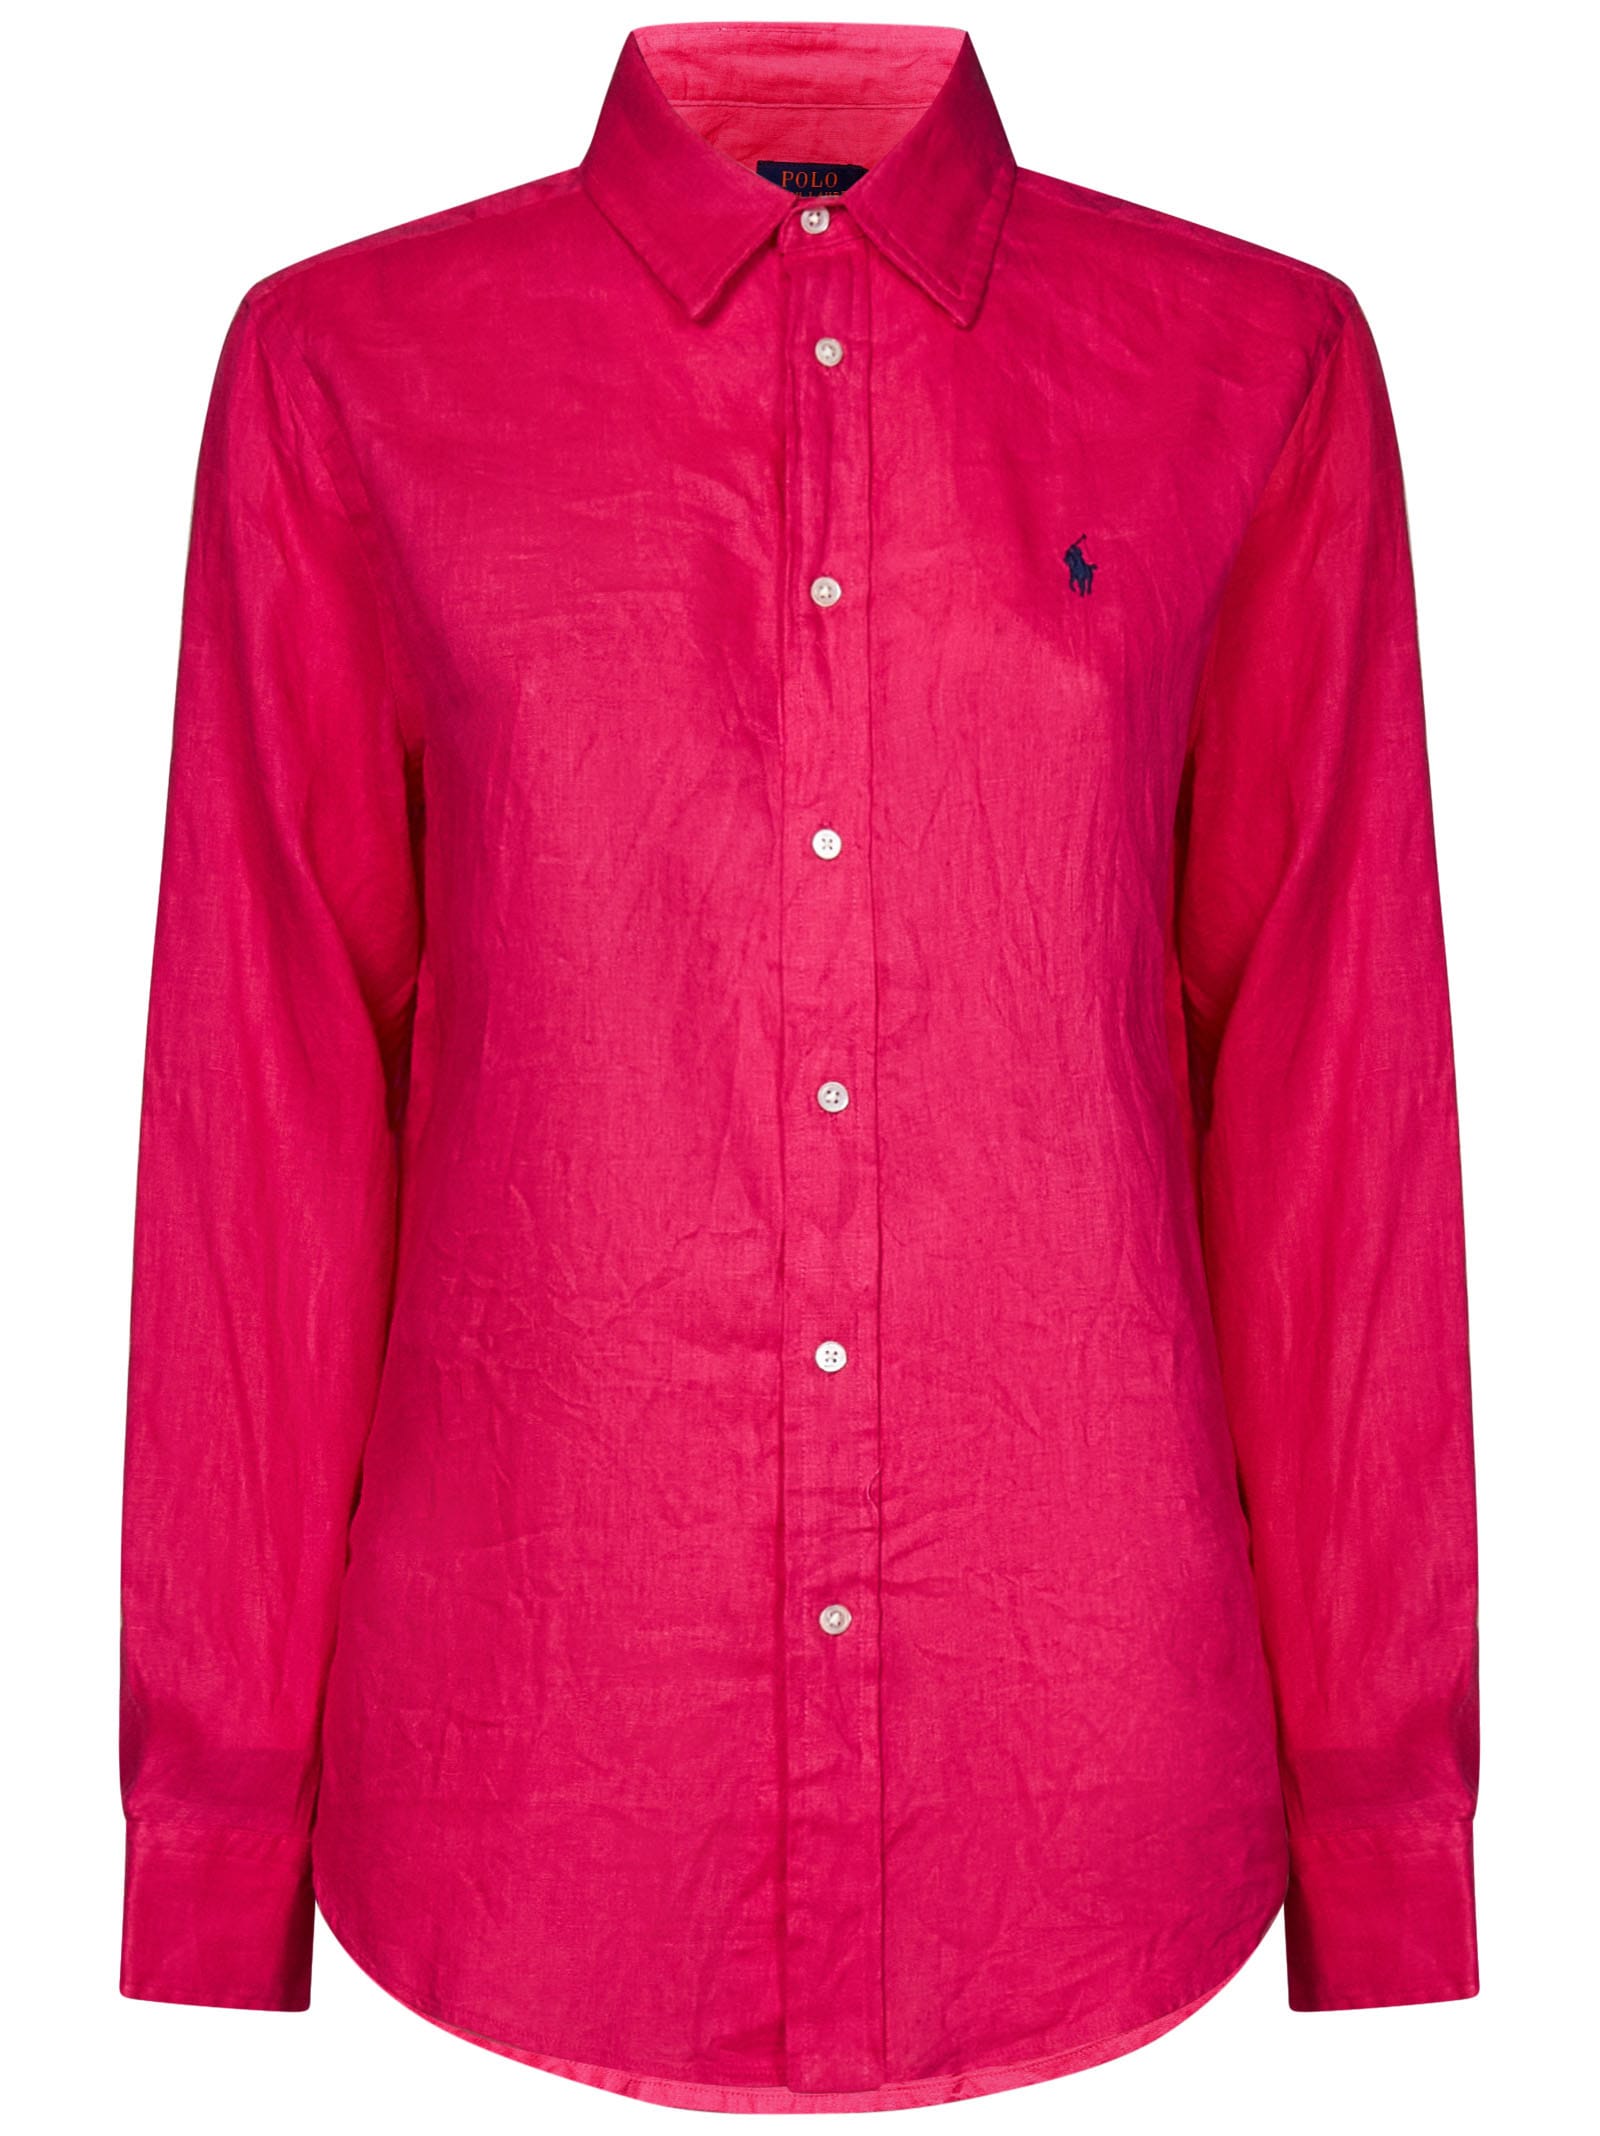 Shirt Polo Ralph Lauren - FUXIA - female - Size: Small